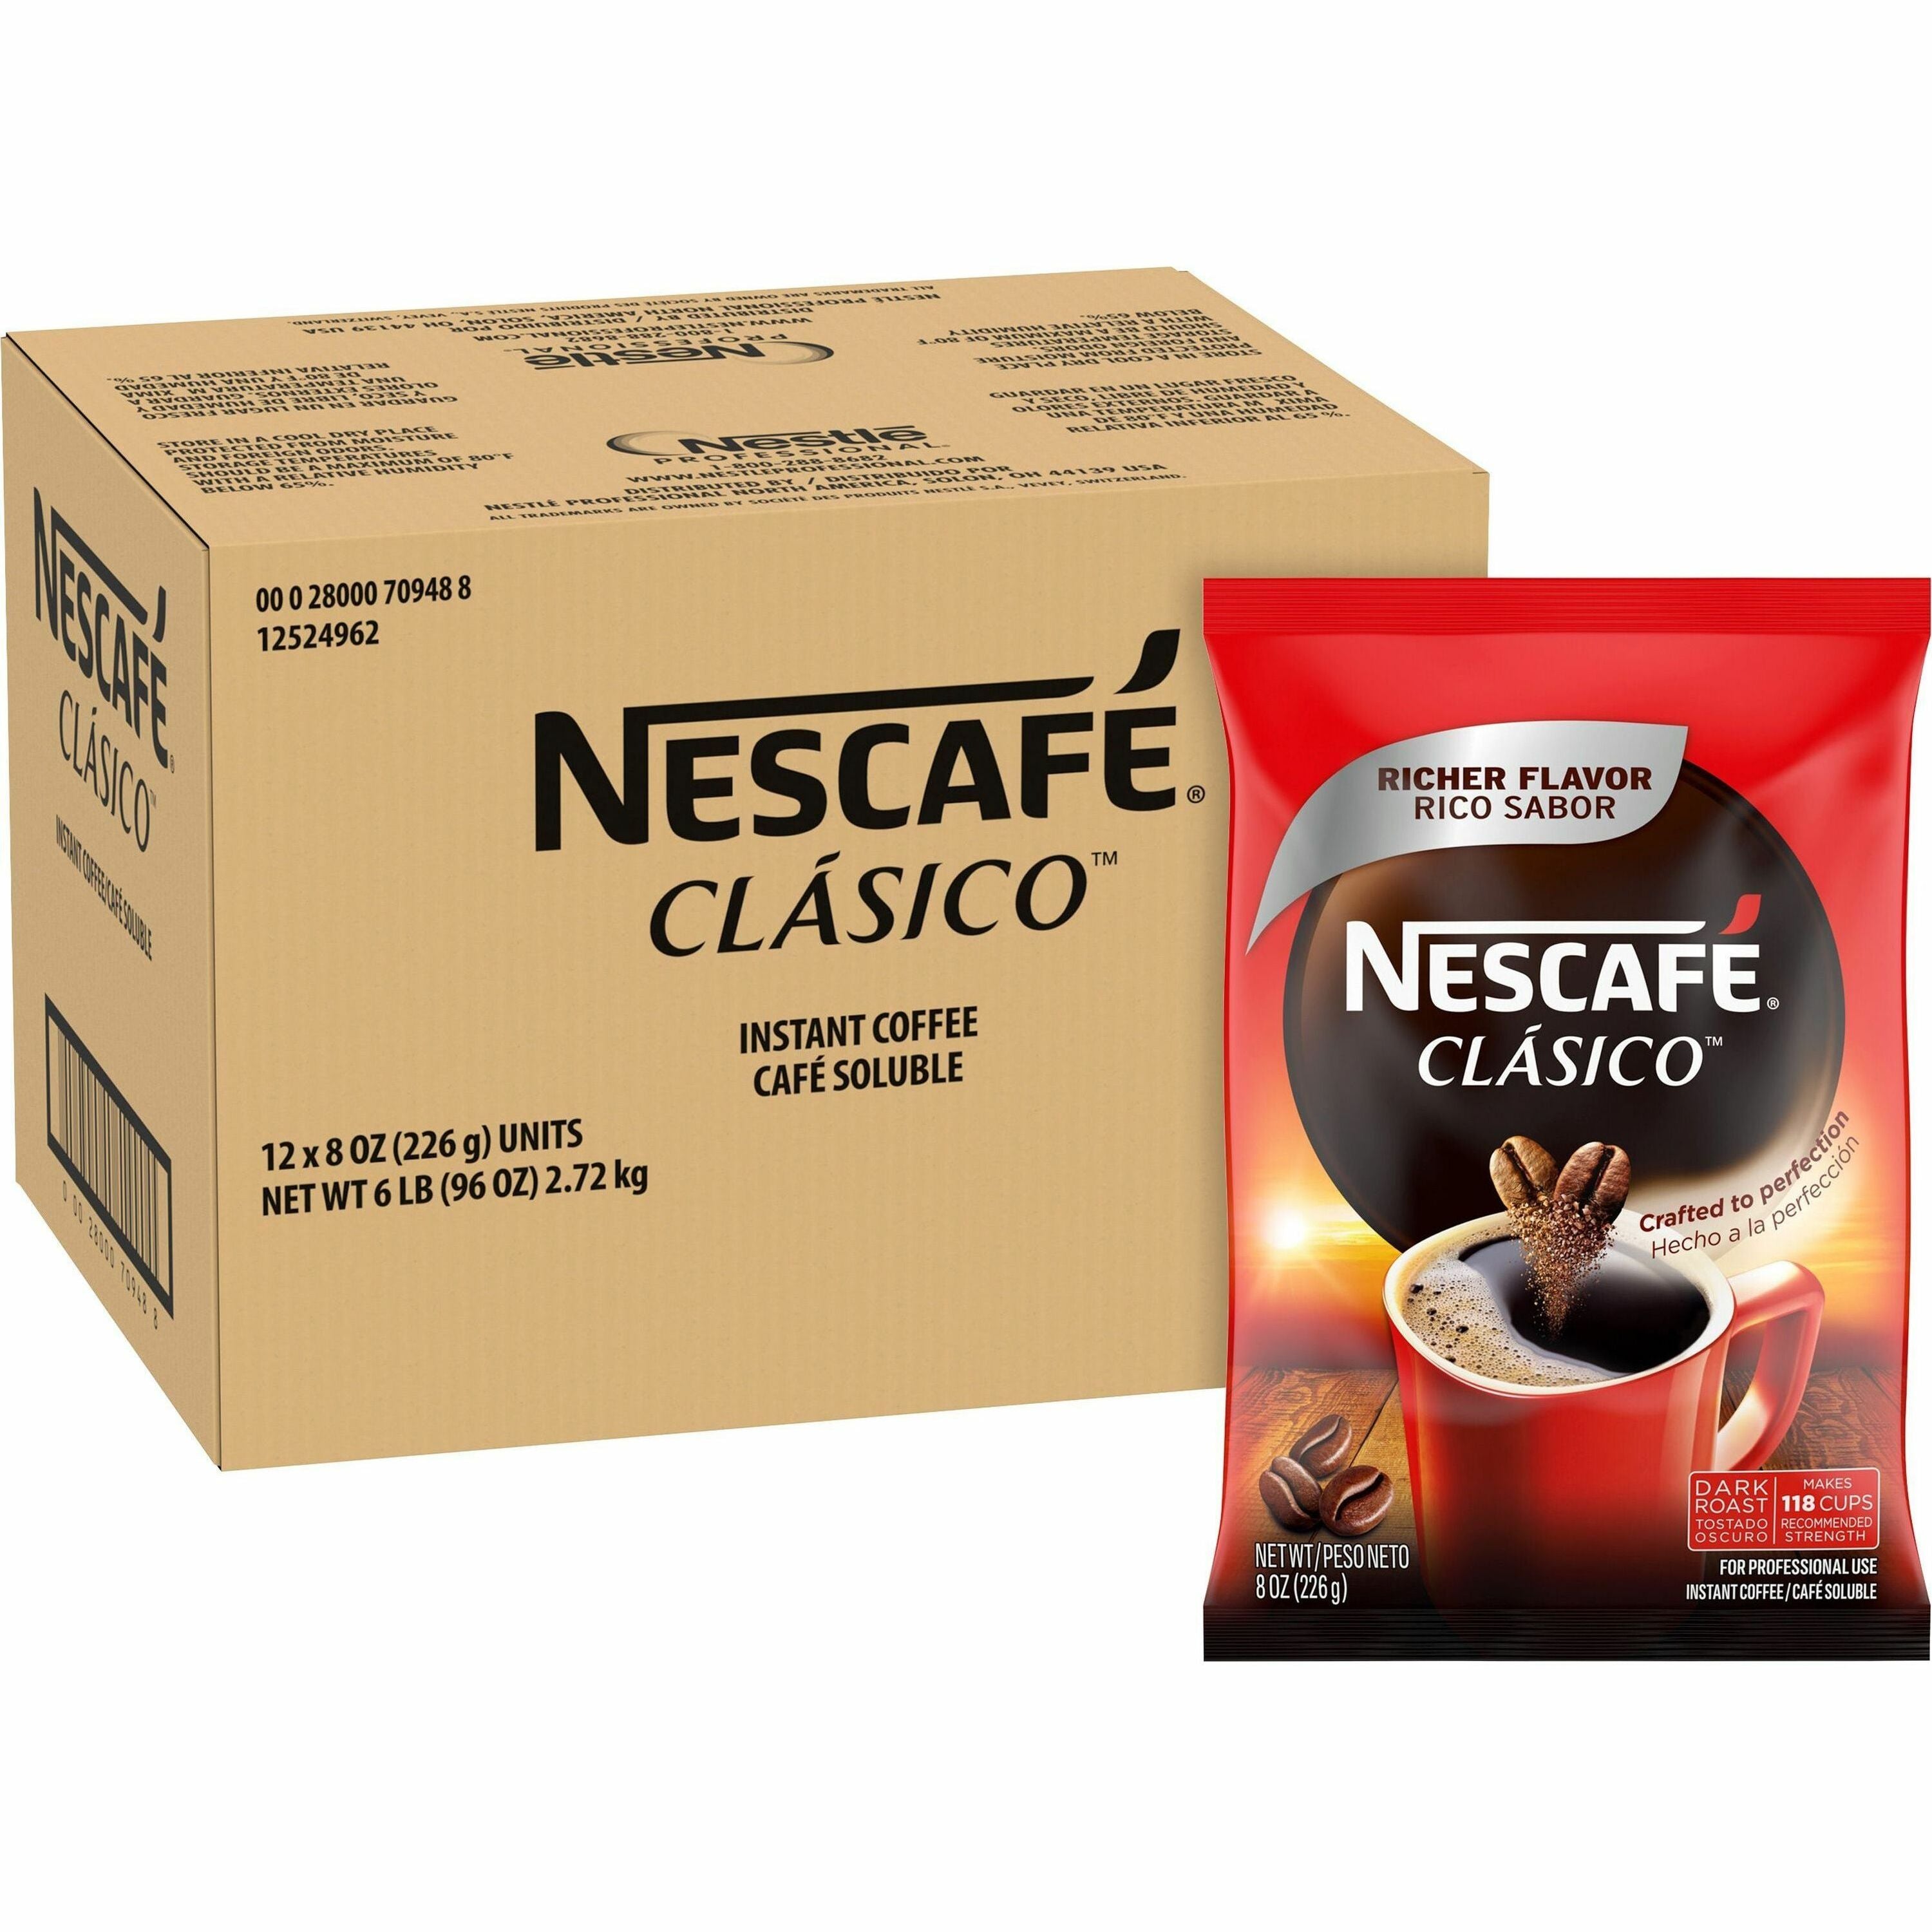 nescafe-clasico-dark-roast-instant-coffee-dark-128-oz-12-carton_nes70948 - 1